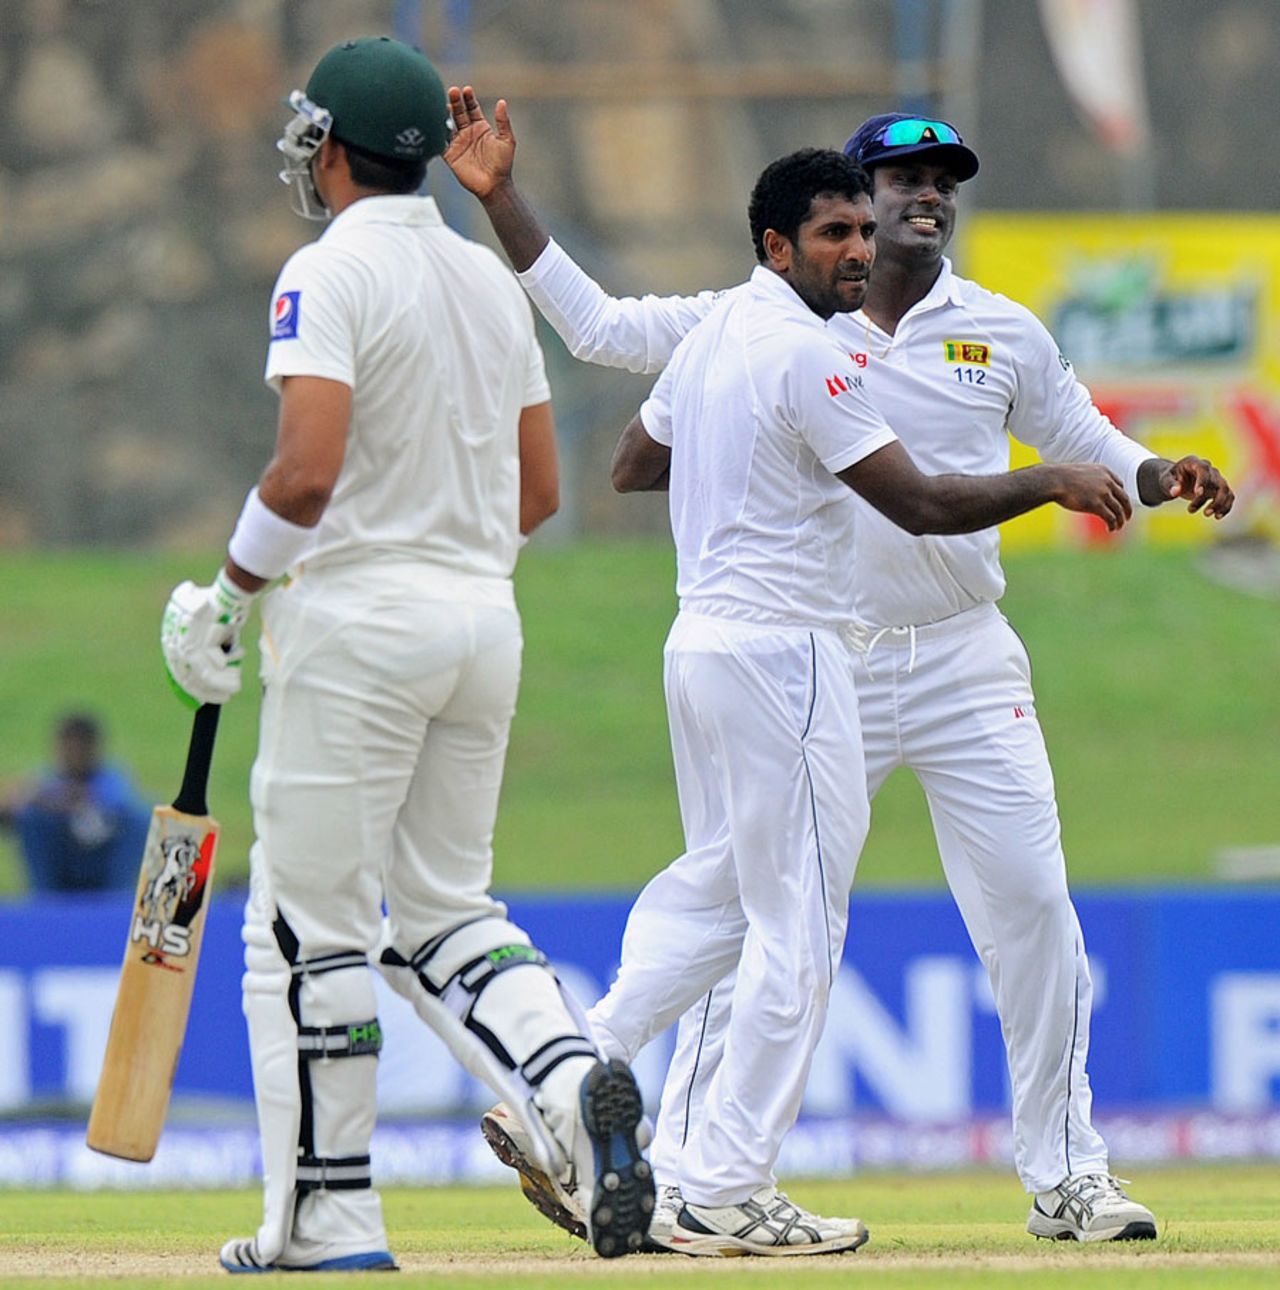 Dhammika Prasad celebrates after dismissing Khurram Manzoor, Sri Lanka v Pakistan, 1st Test, Galle, 1st day, August 6, 2014